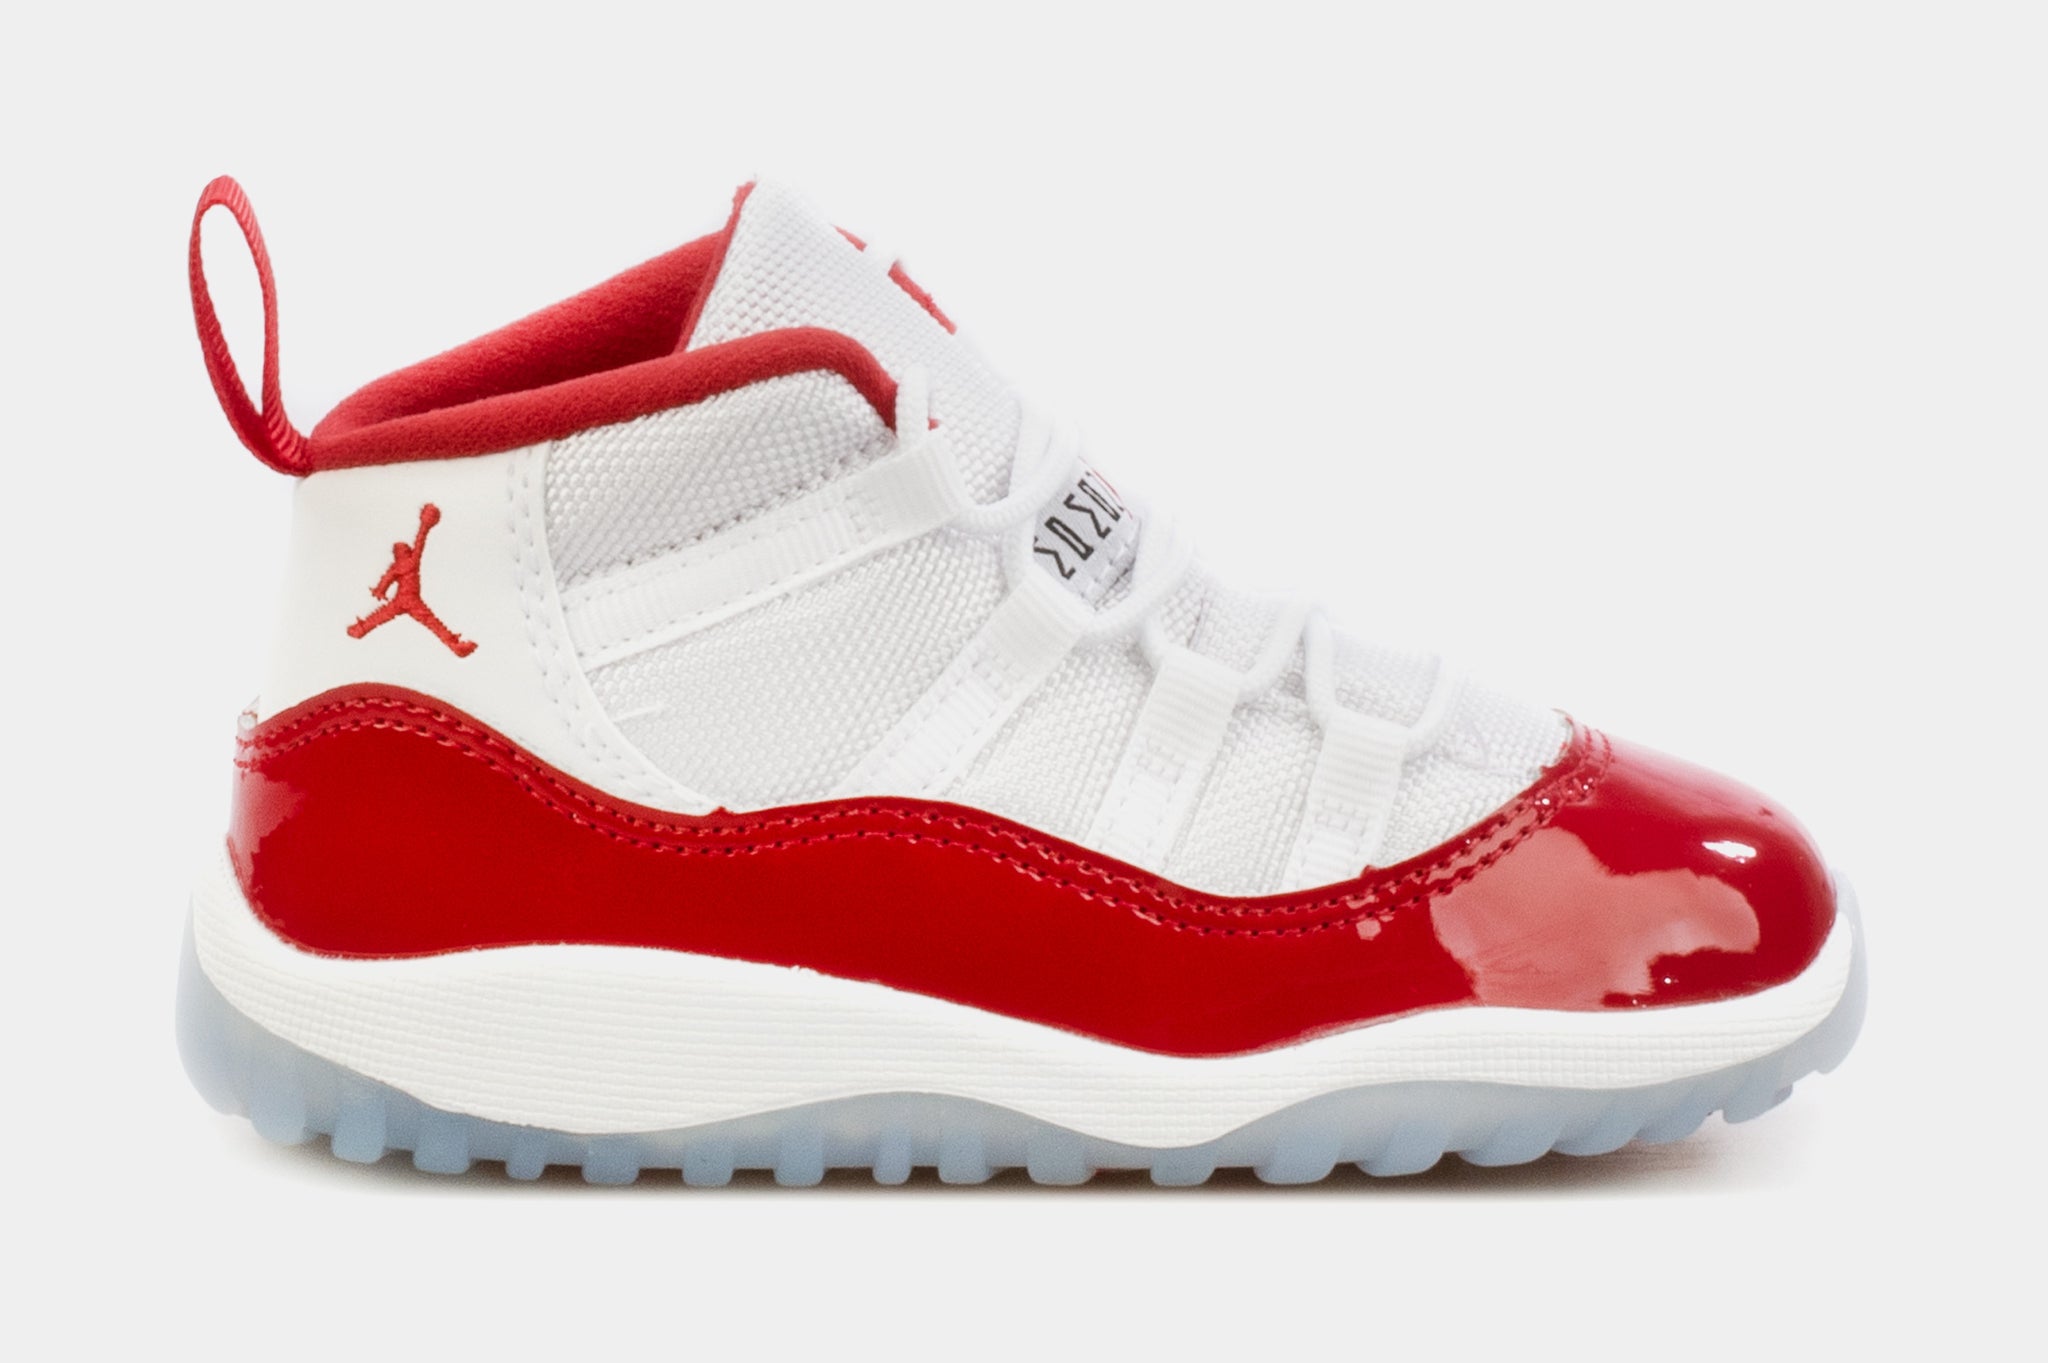 Jordan Air Jordan 11 Retro Cherry Infant Toddler Lifestyle Shoes